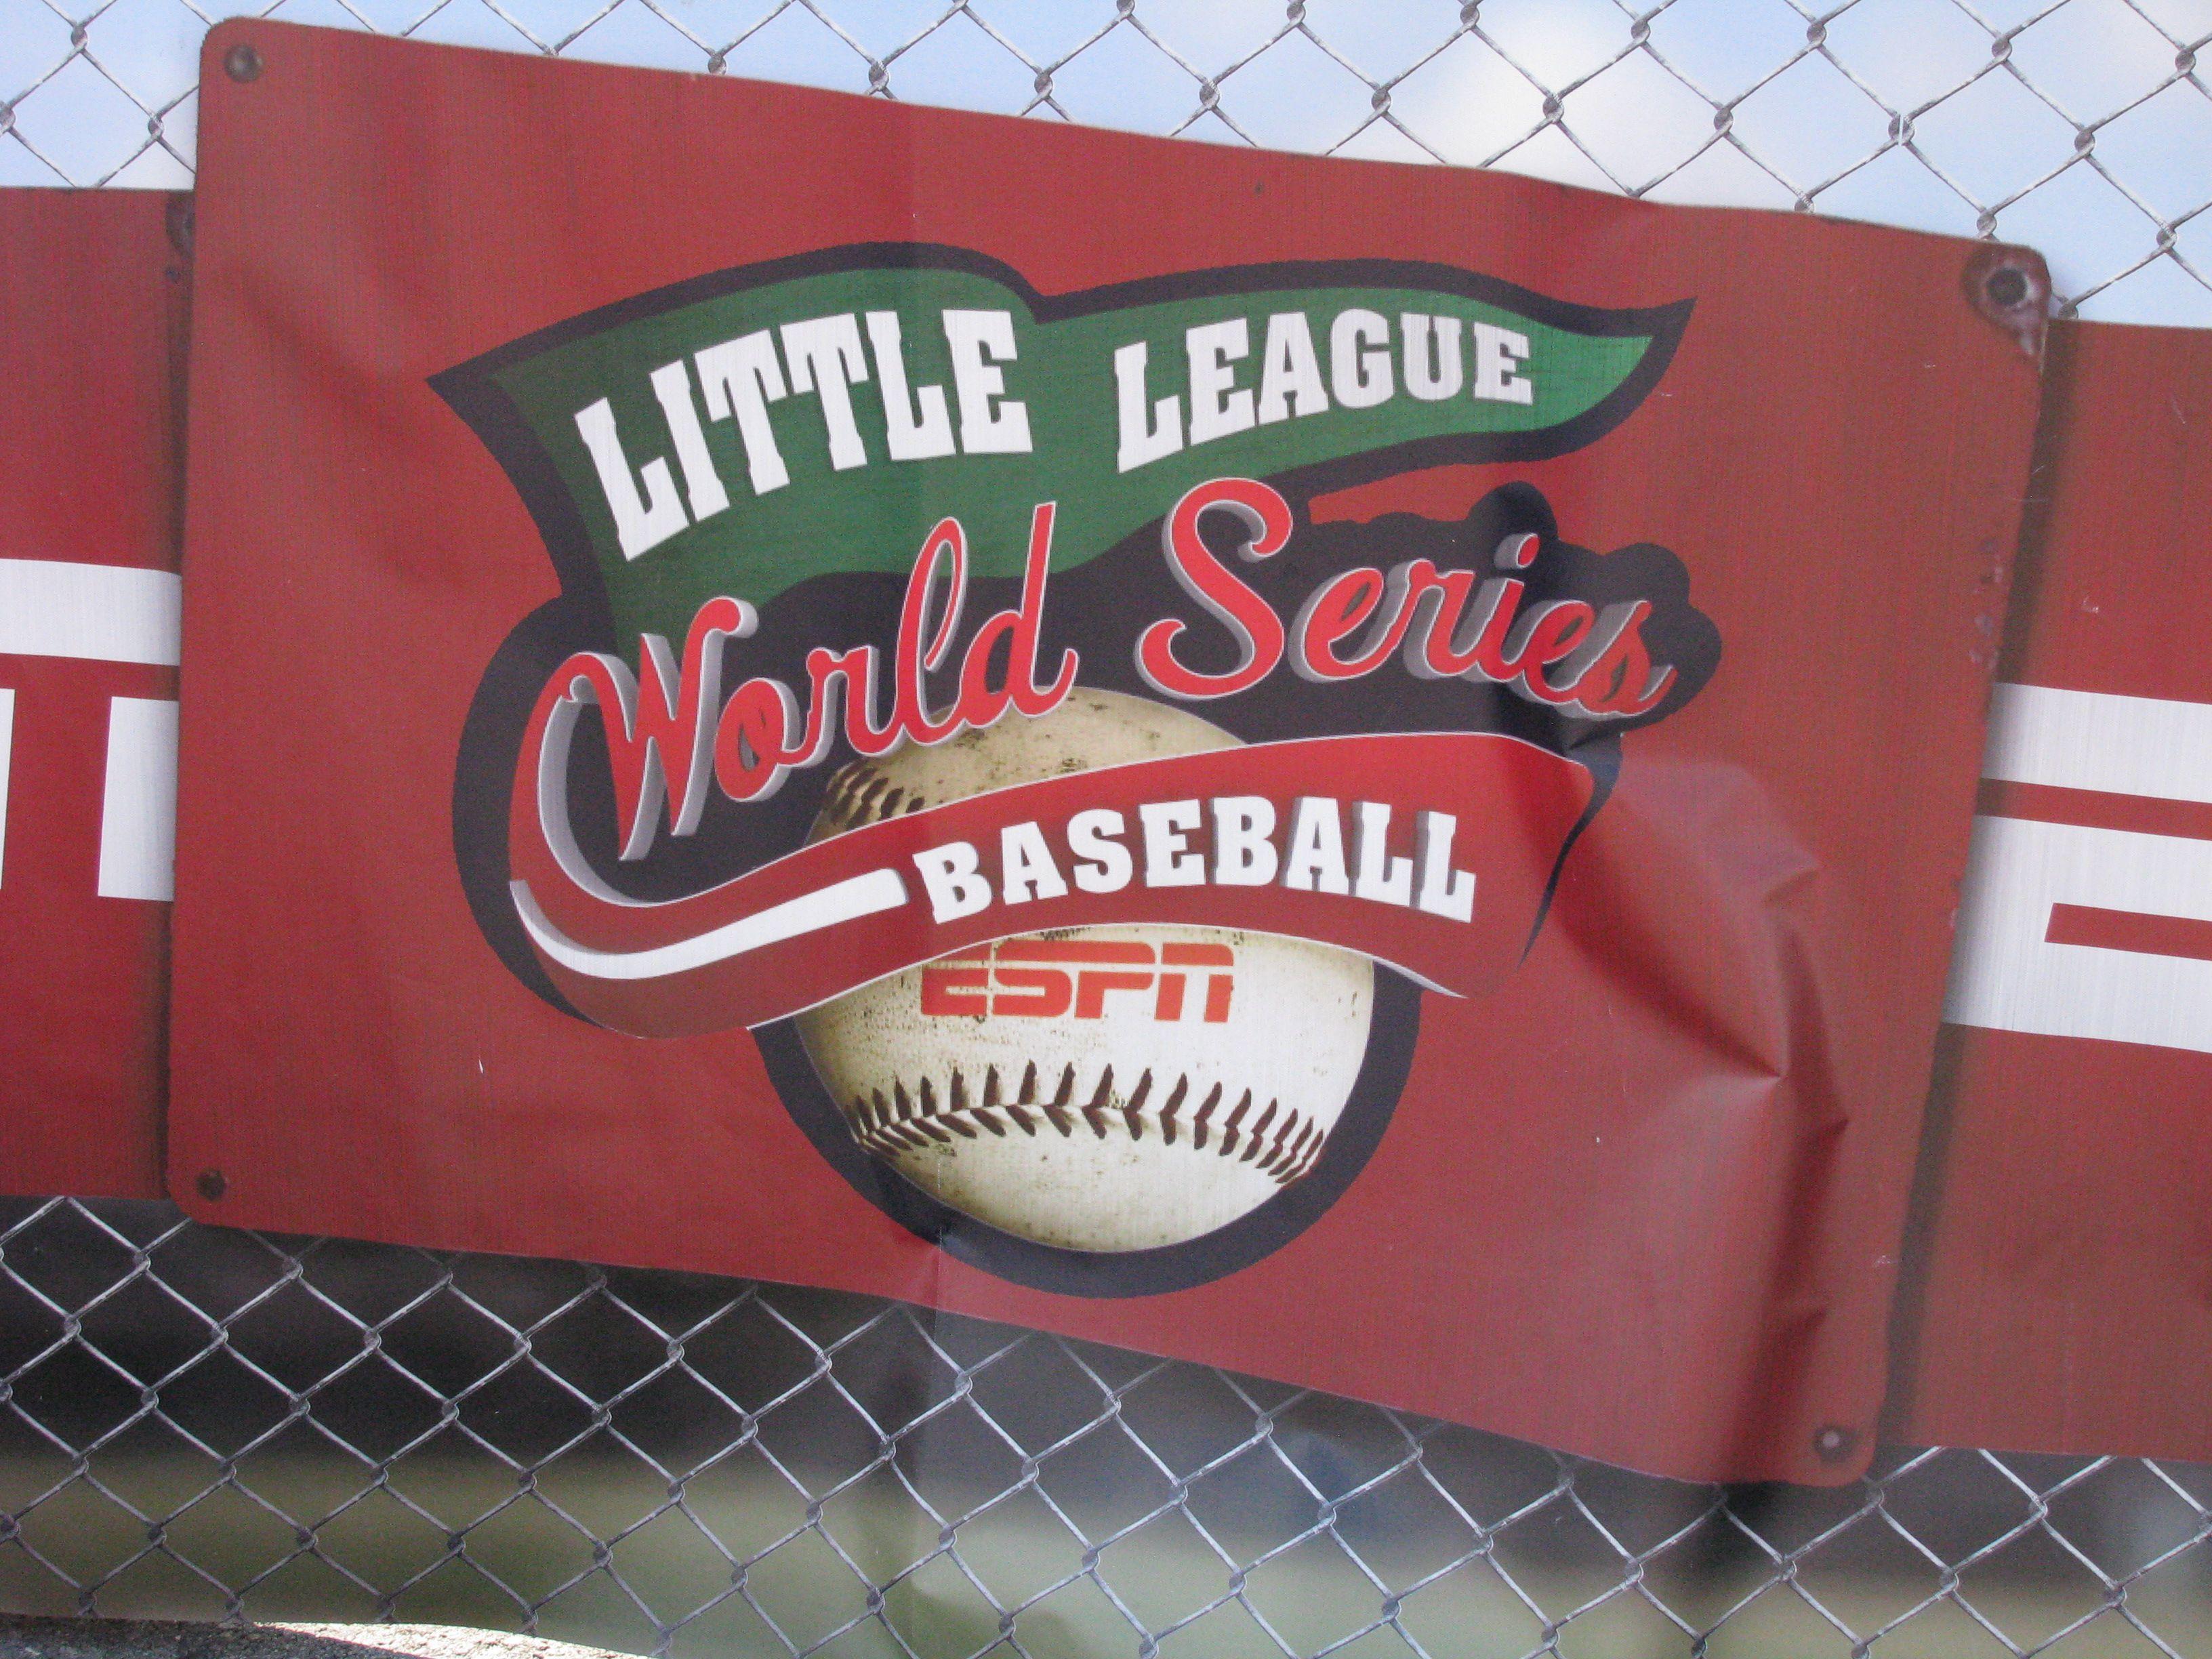 The 2012 Little League World Series